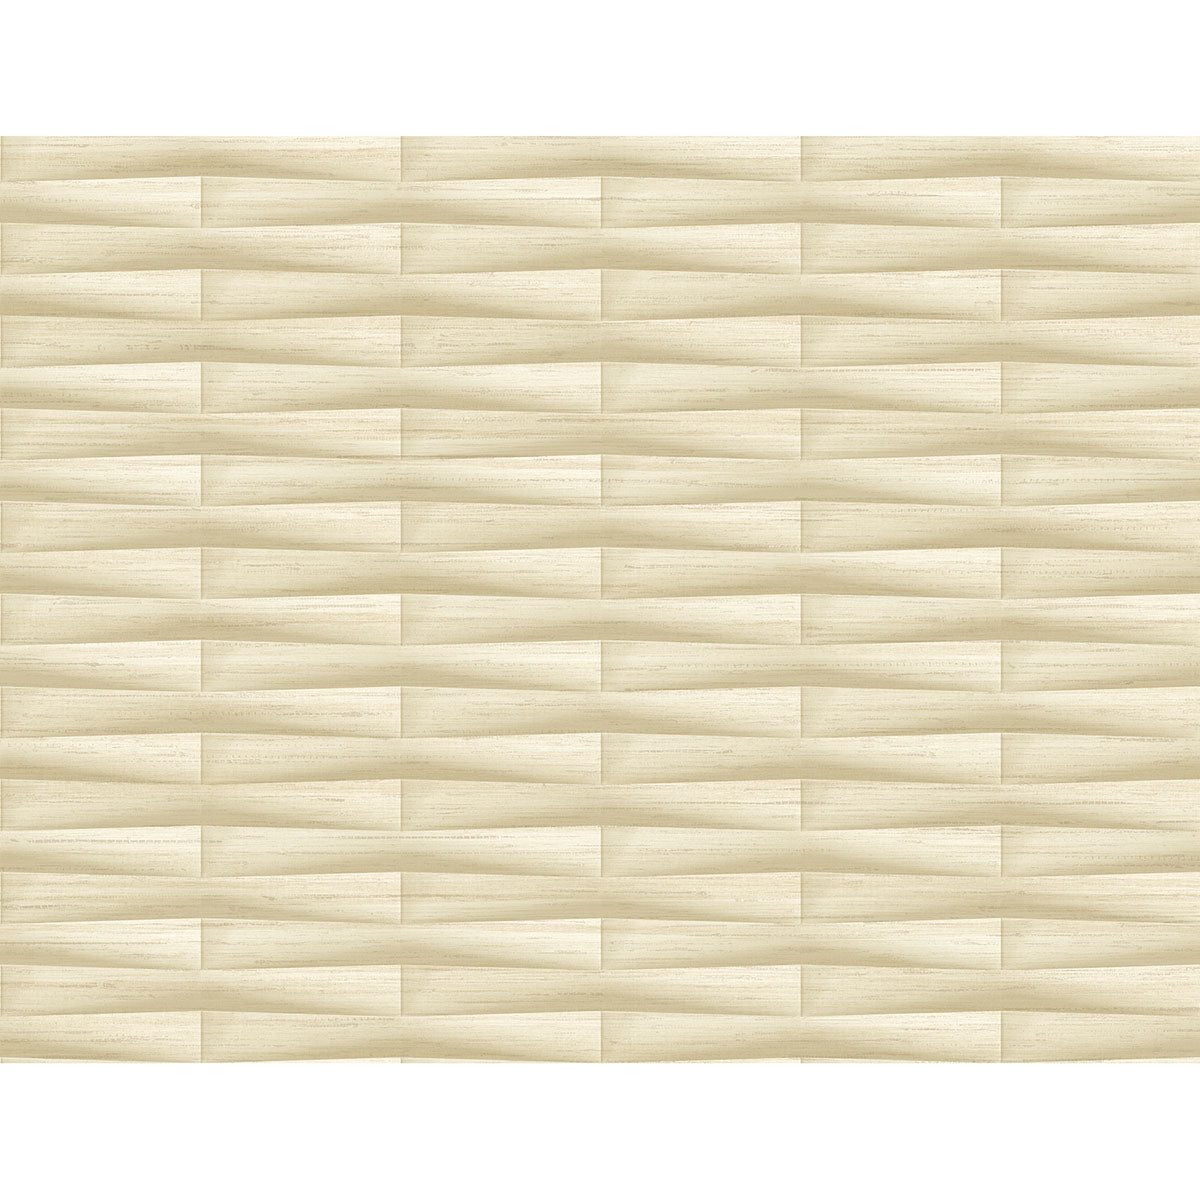 Picture of Gator Wheat Geometric Stripe Wallpaper